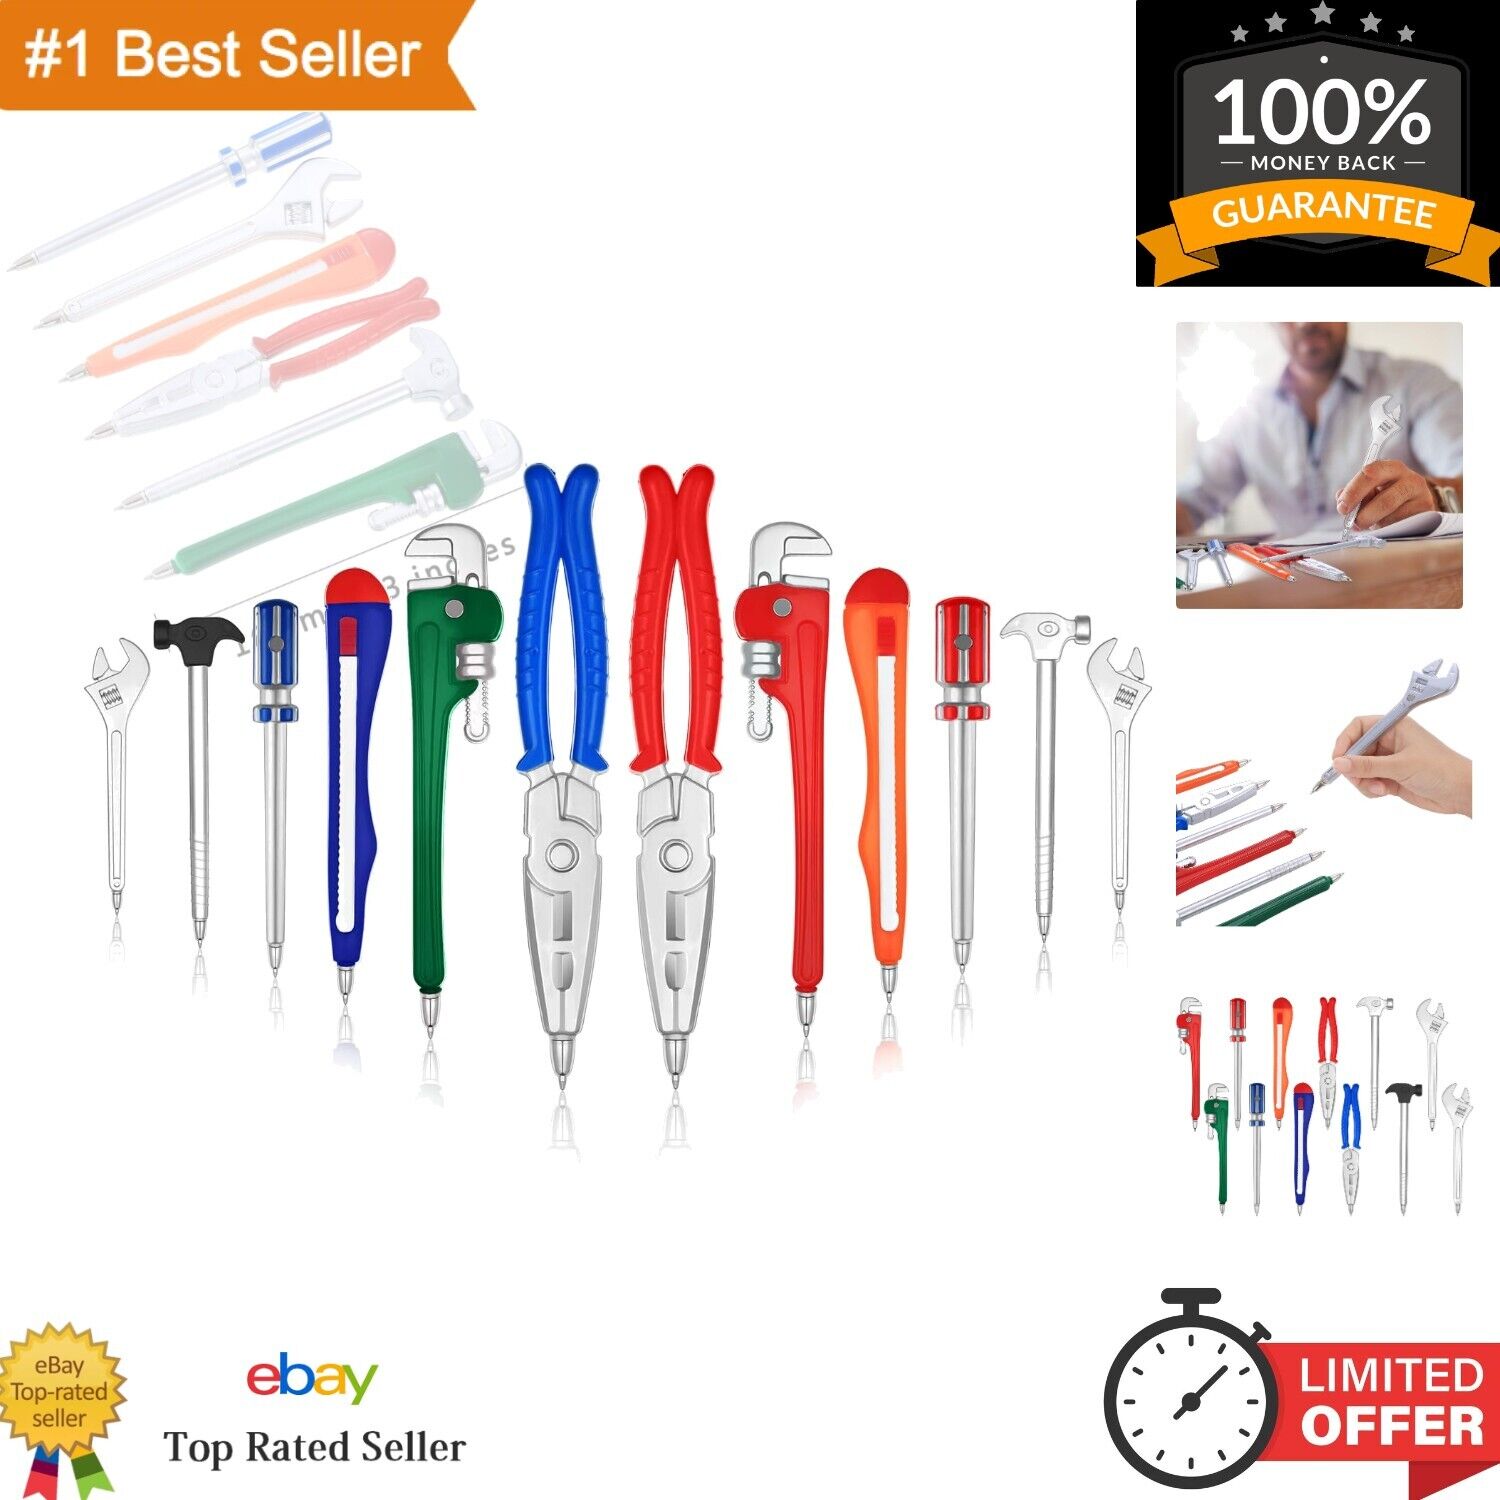 24 Pcs Novelty Tool Ballpoint Pens - Creative Design - Blue, Green, Red, Silver